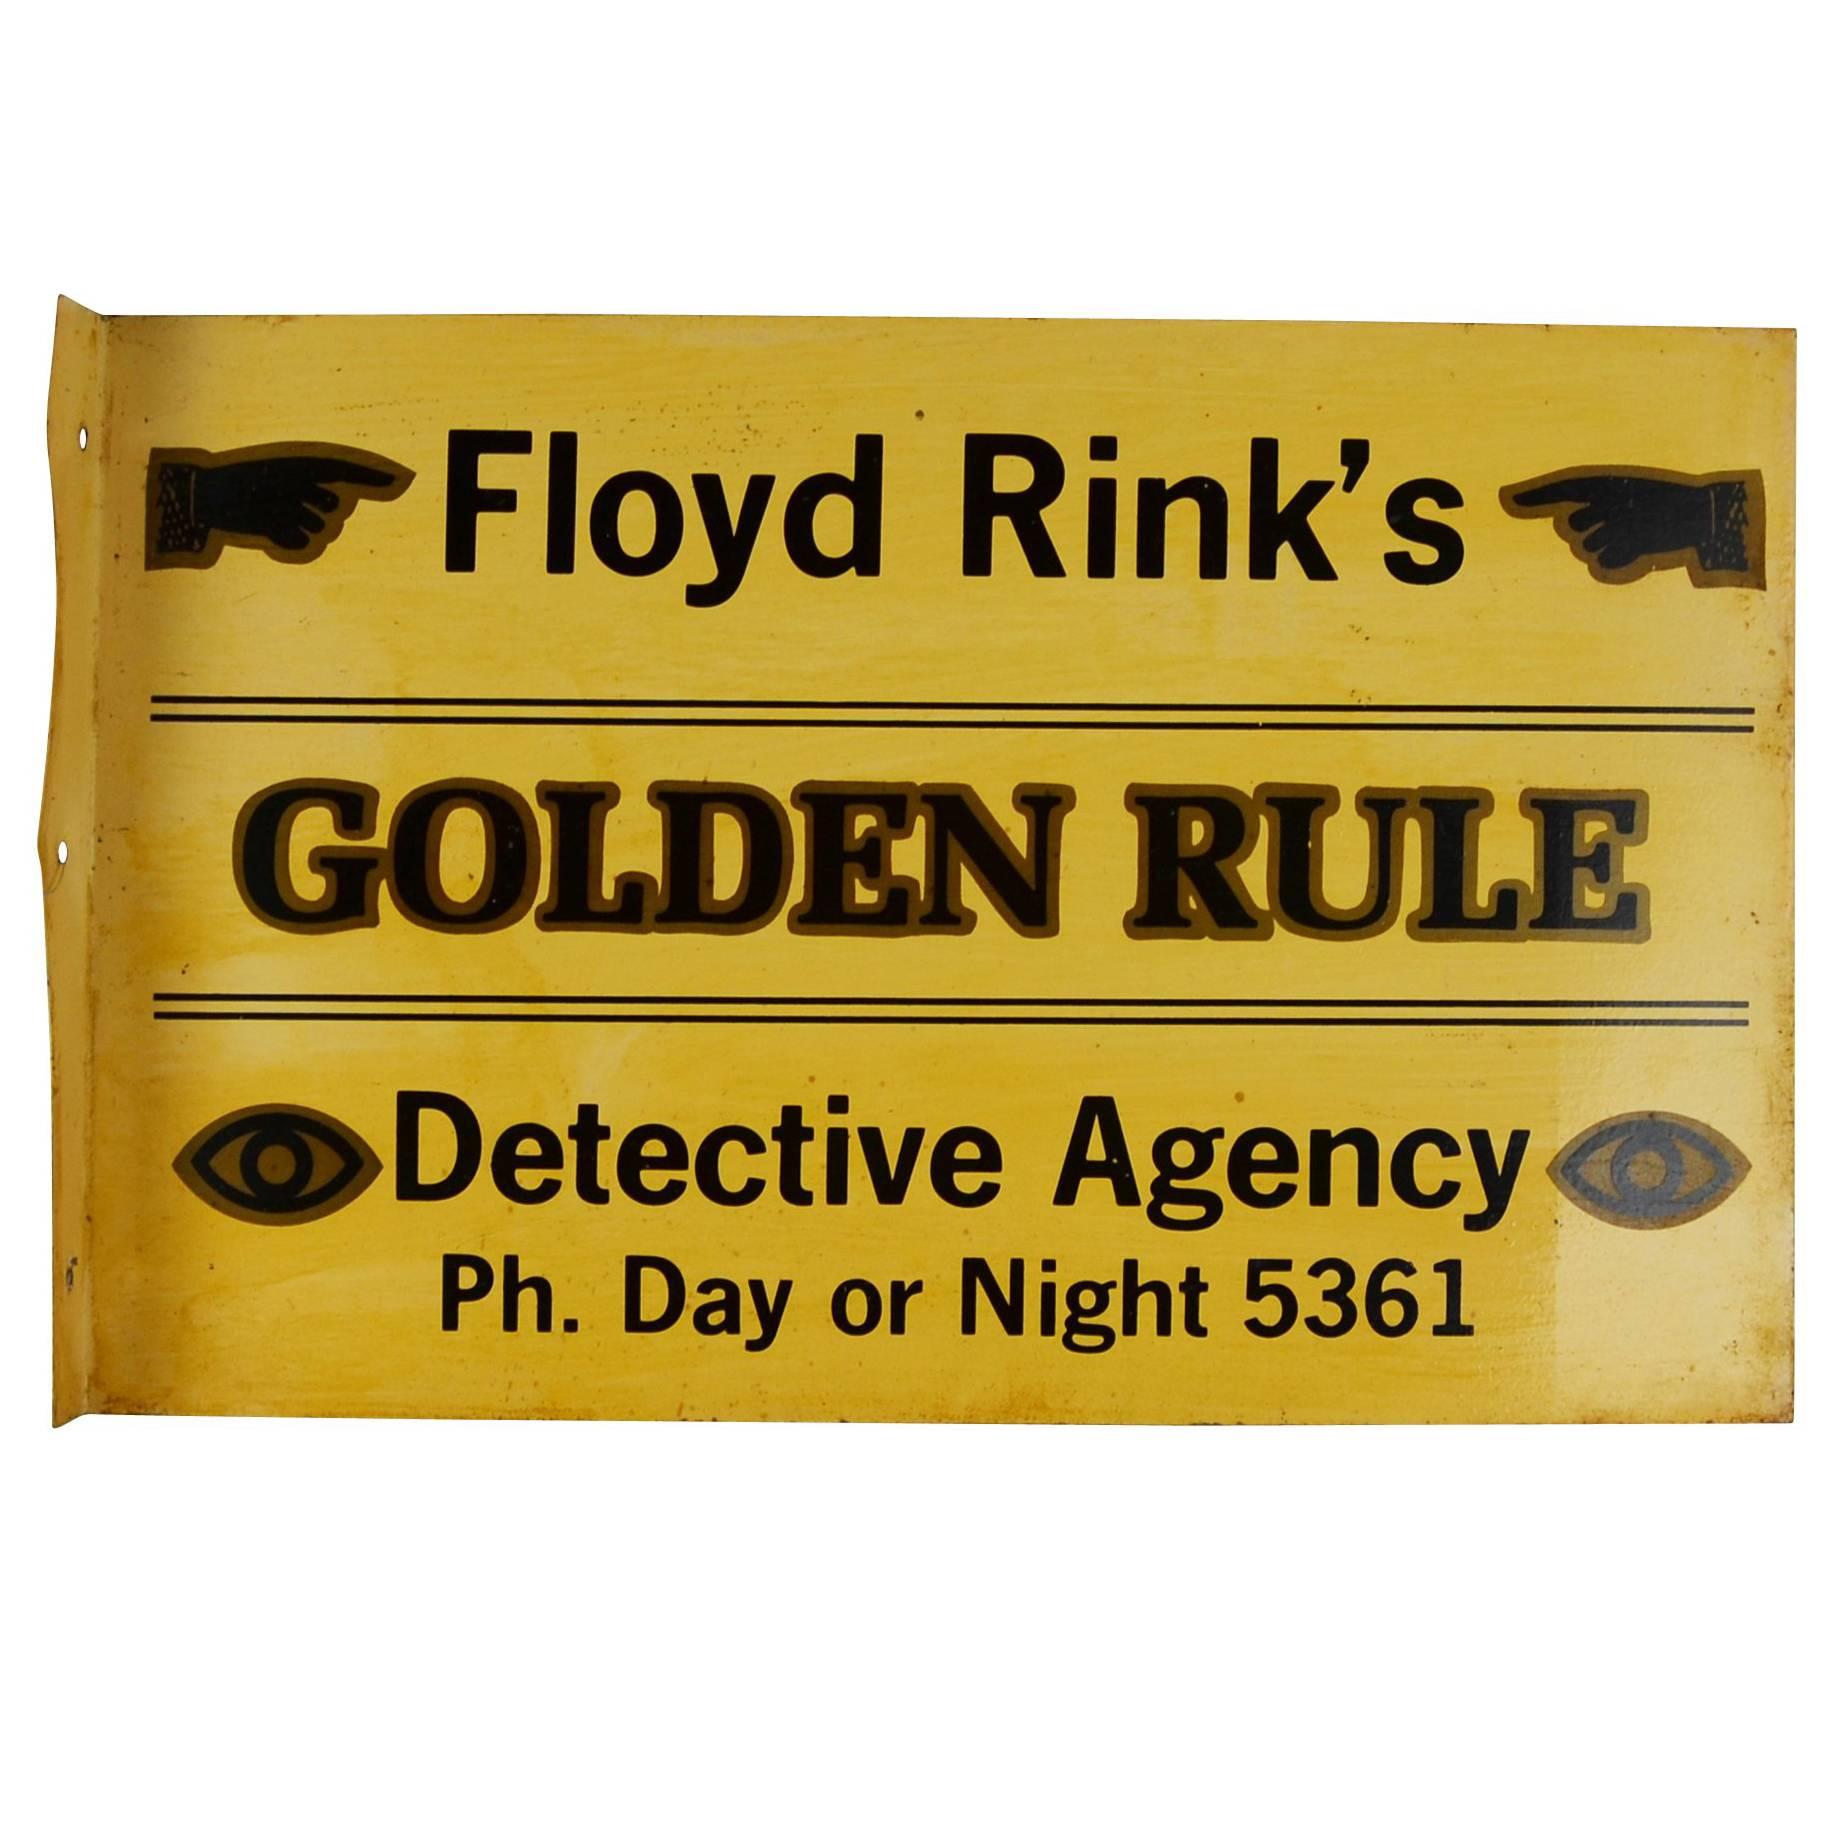 Fantastic Detective Agency Sign, circa 1930